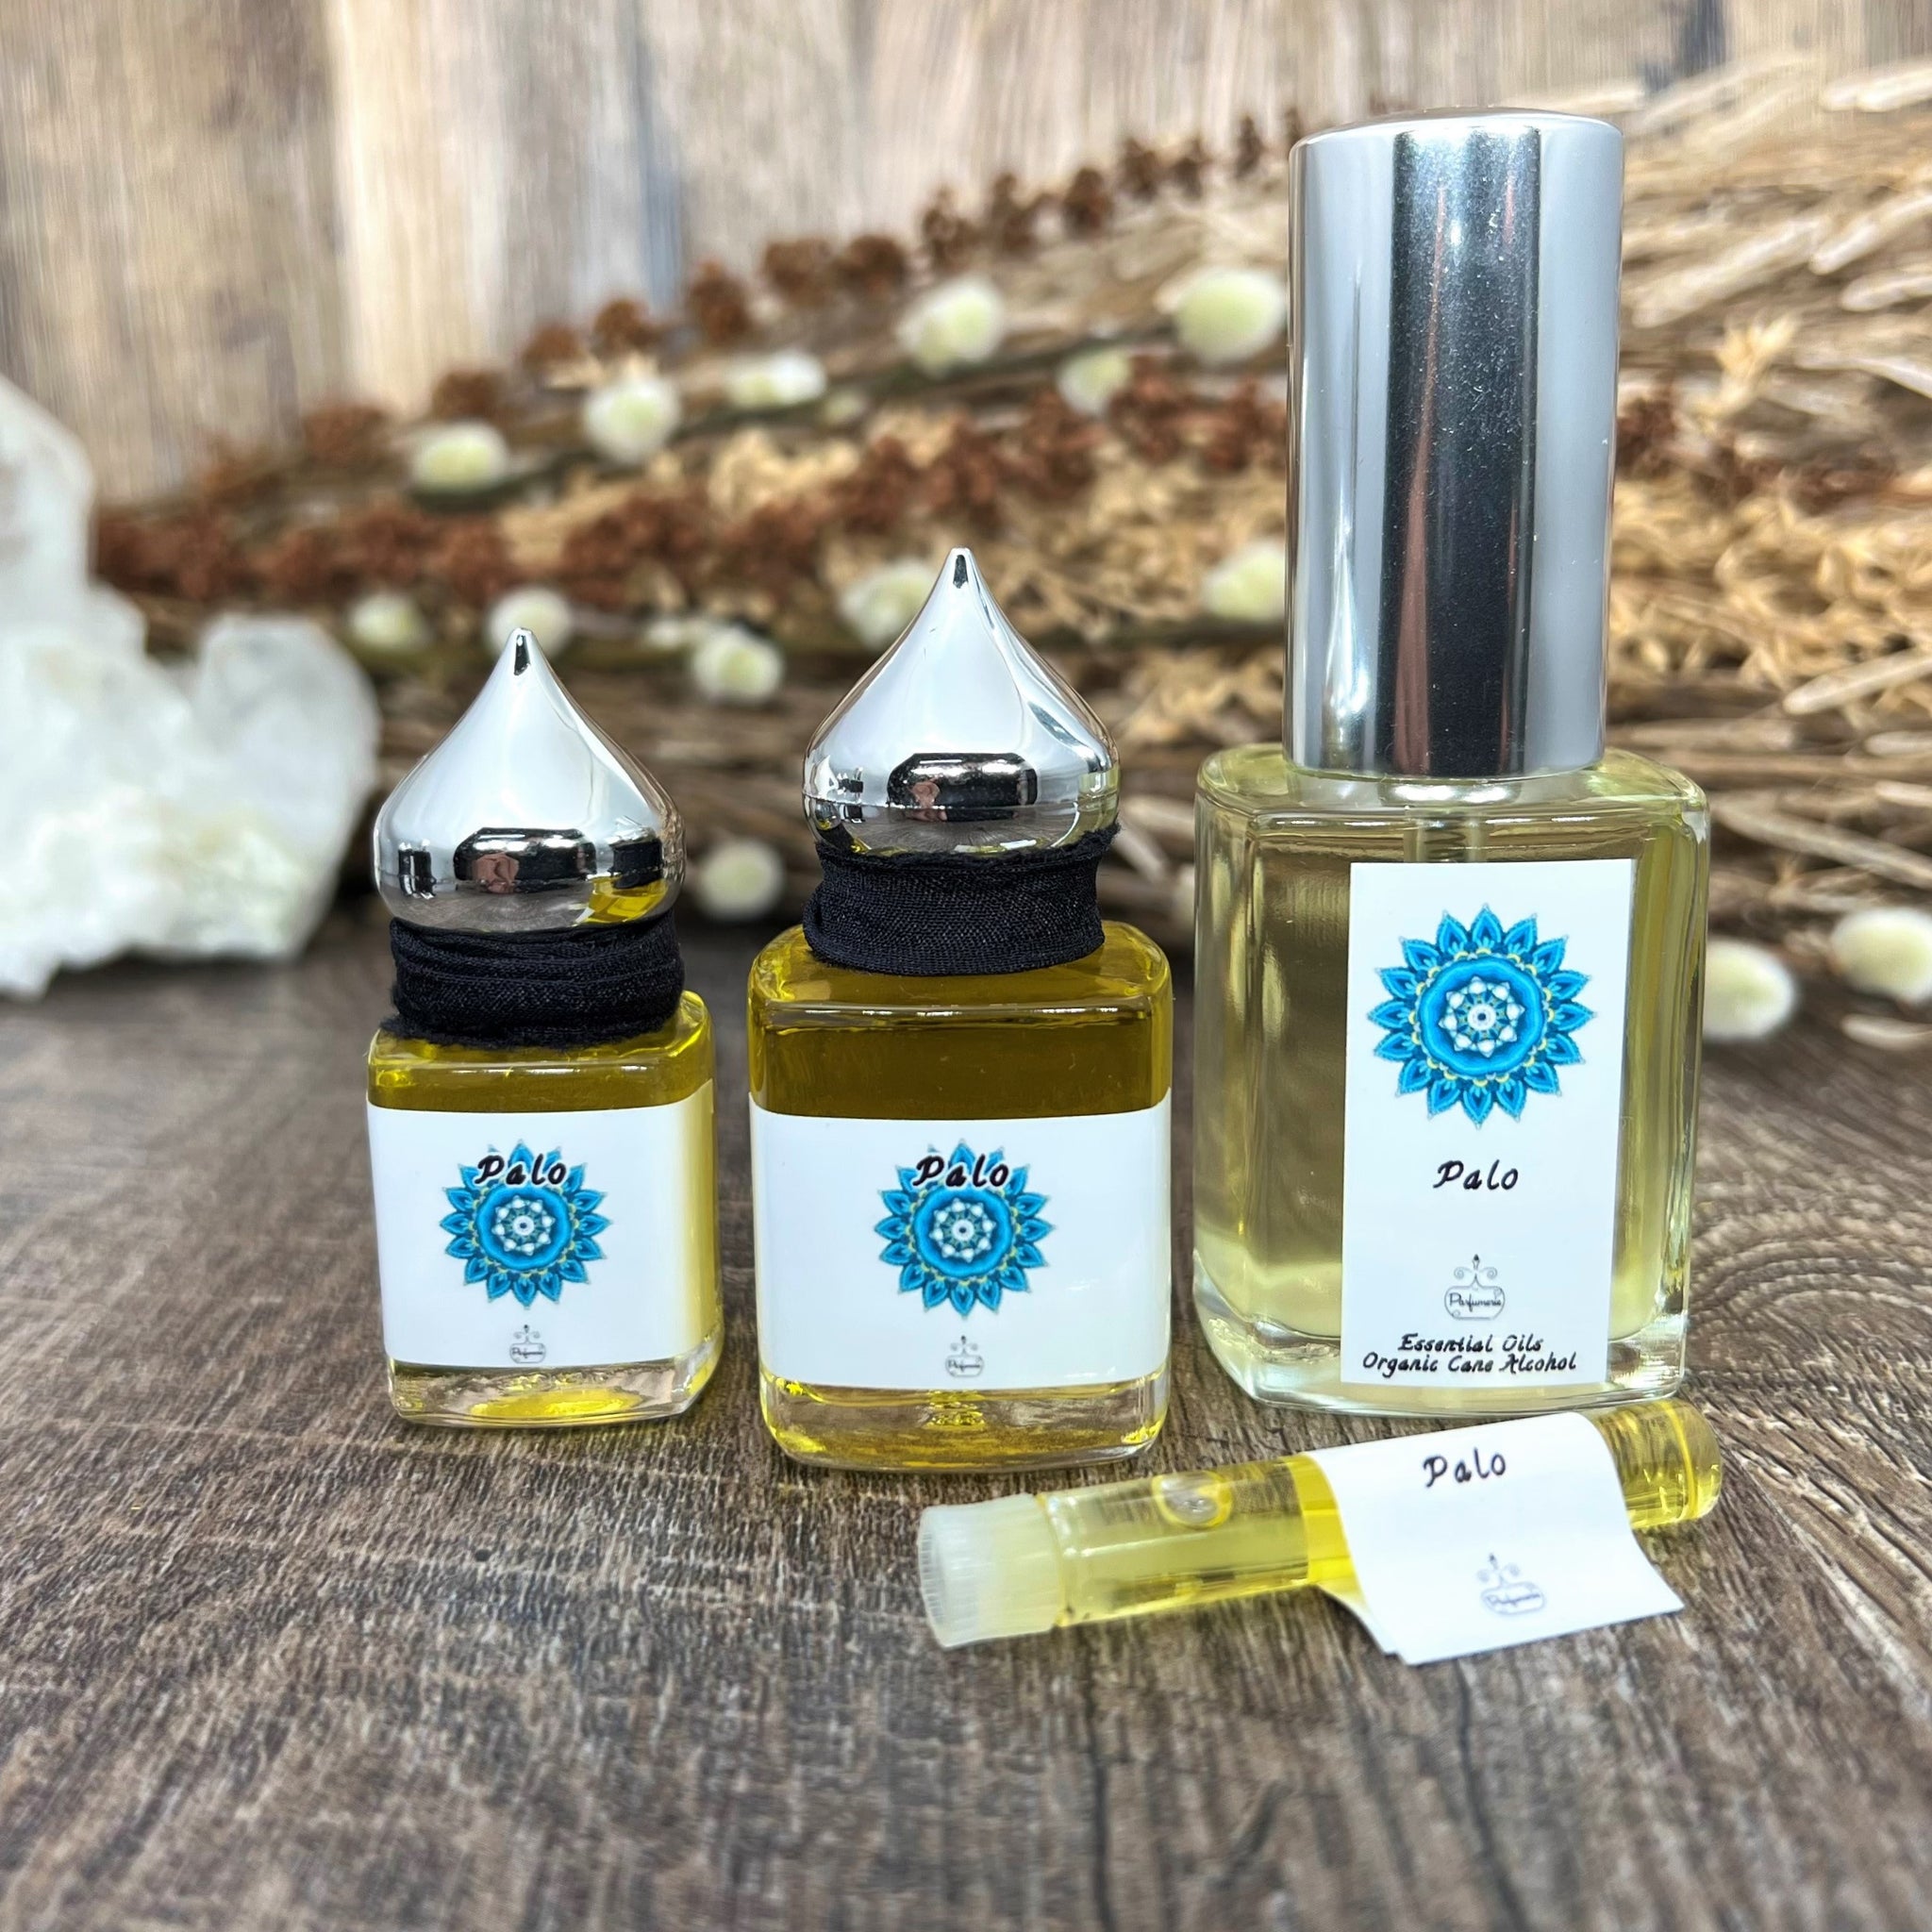 PALO - PALO SANTO Essential Oil Perfume, Spiritual, Purification Aroma –  The Parfumerie Store